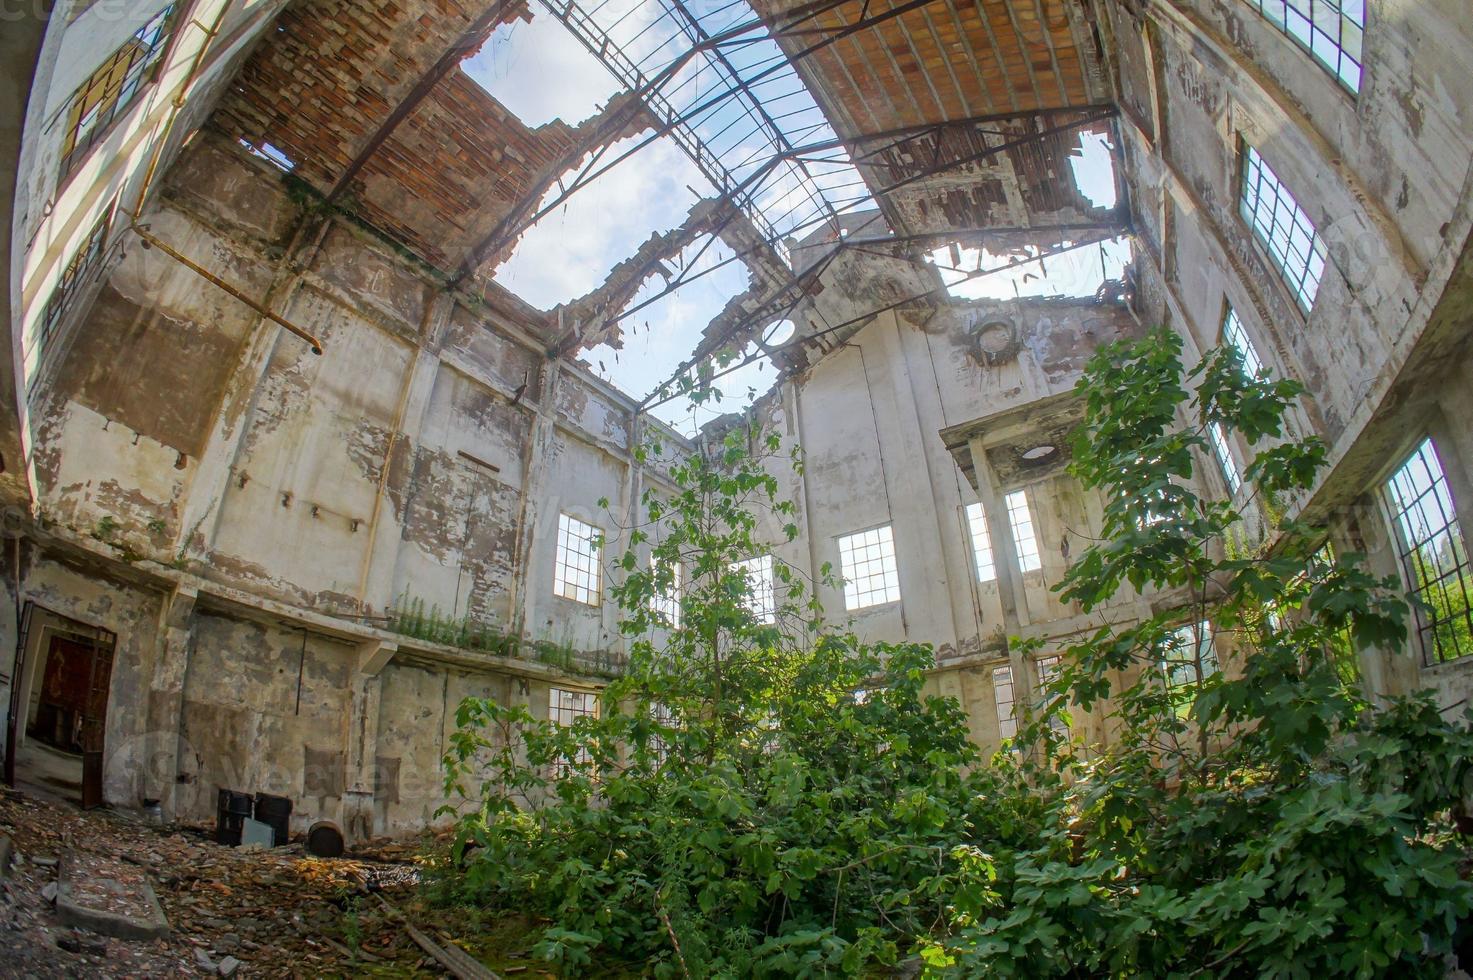 planta industrial arruinada velha abandonada foto